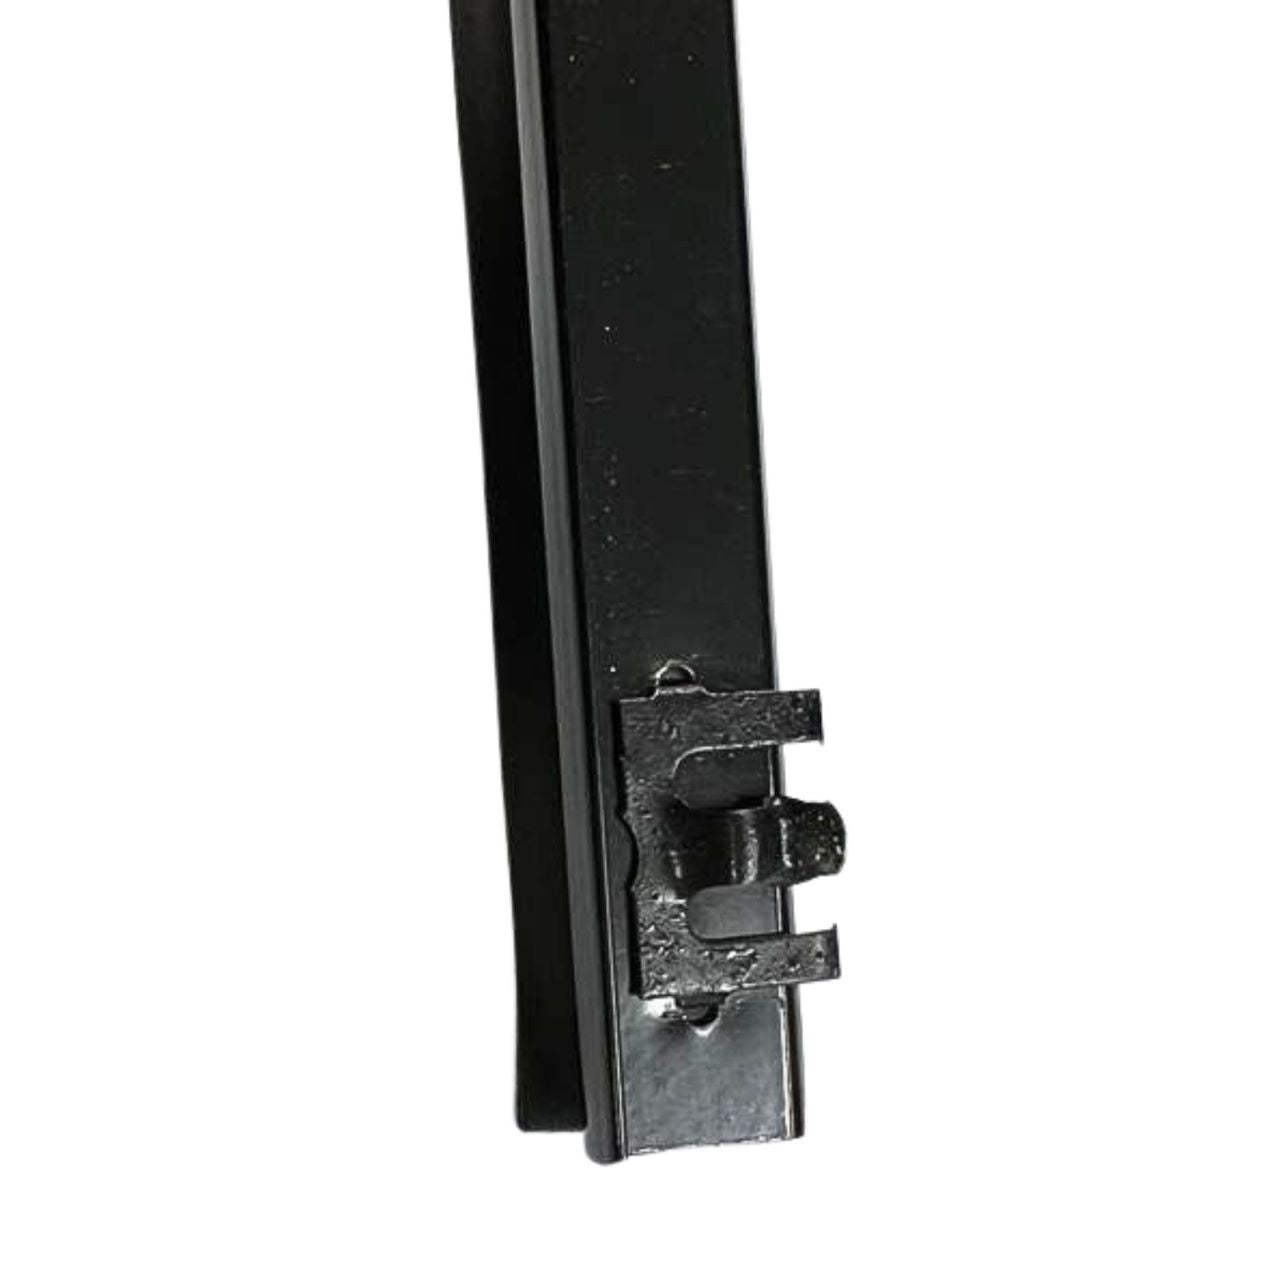 610/180B Coupe SSS Outer door belt seals front LH & RH (2) seals